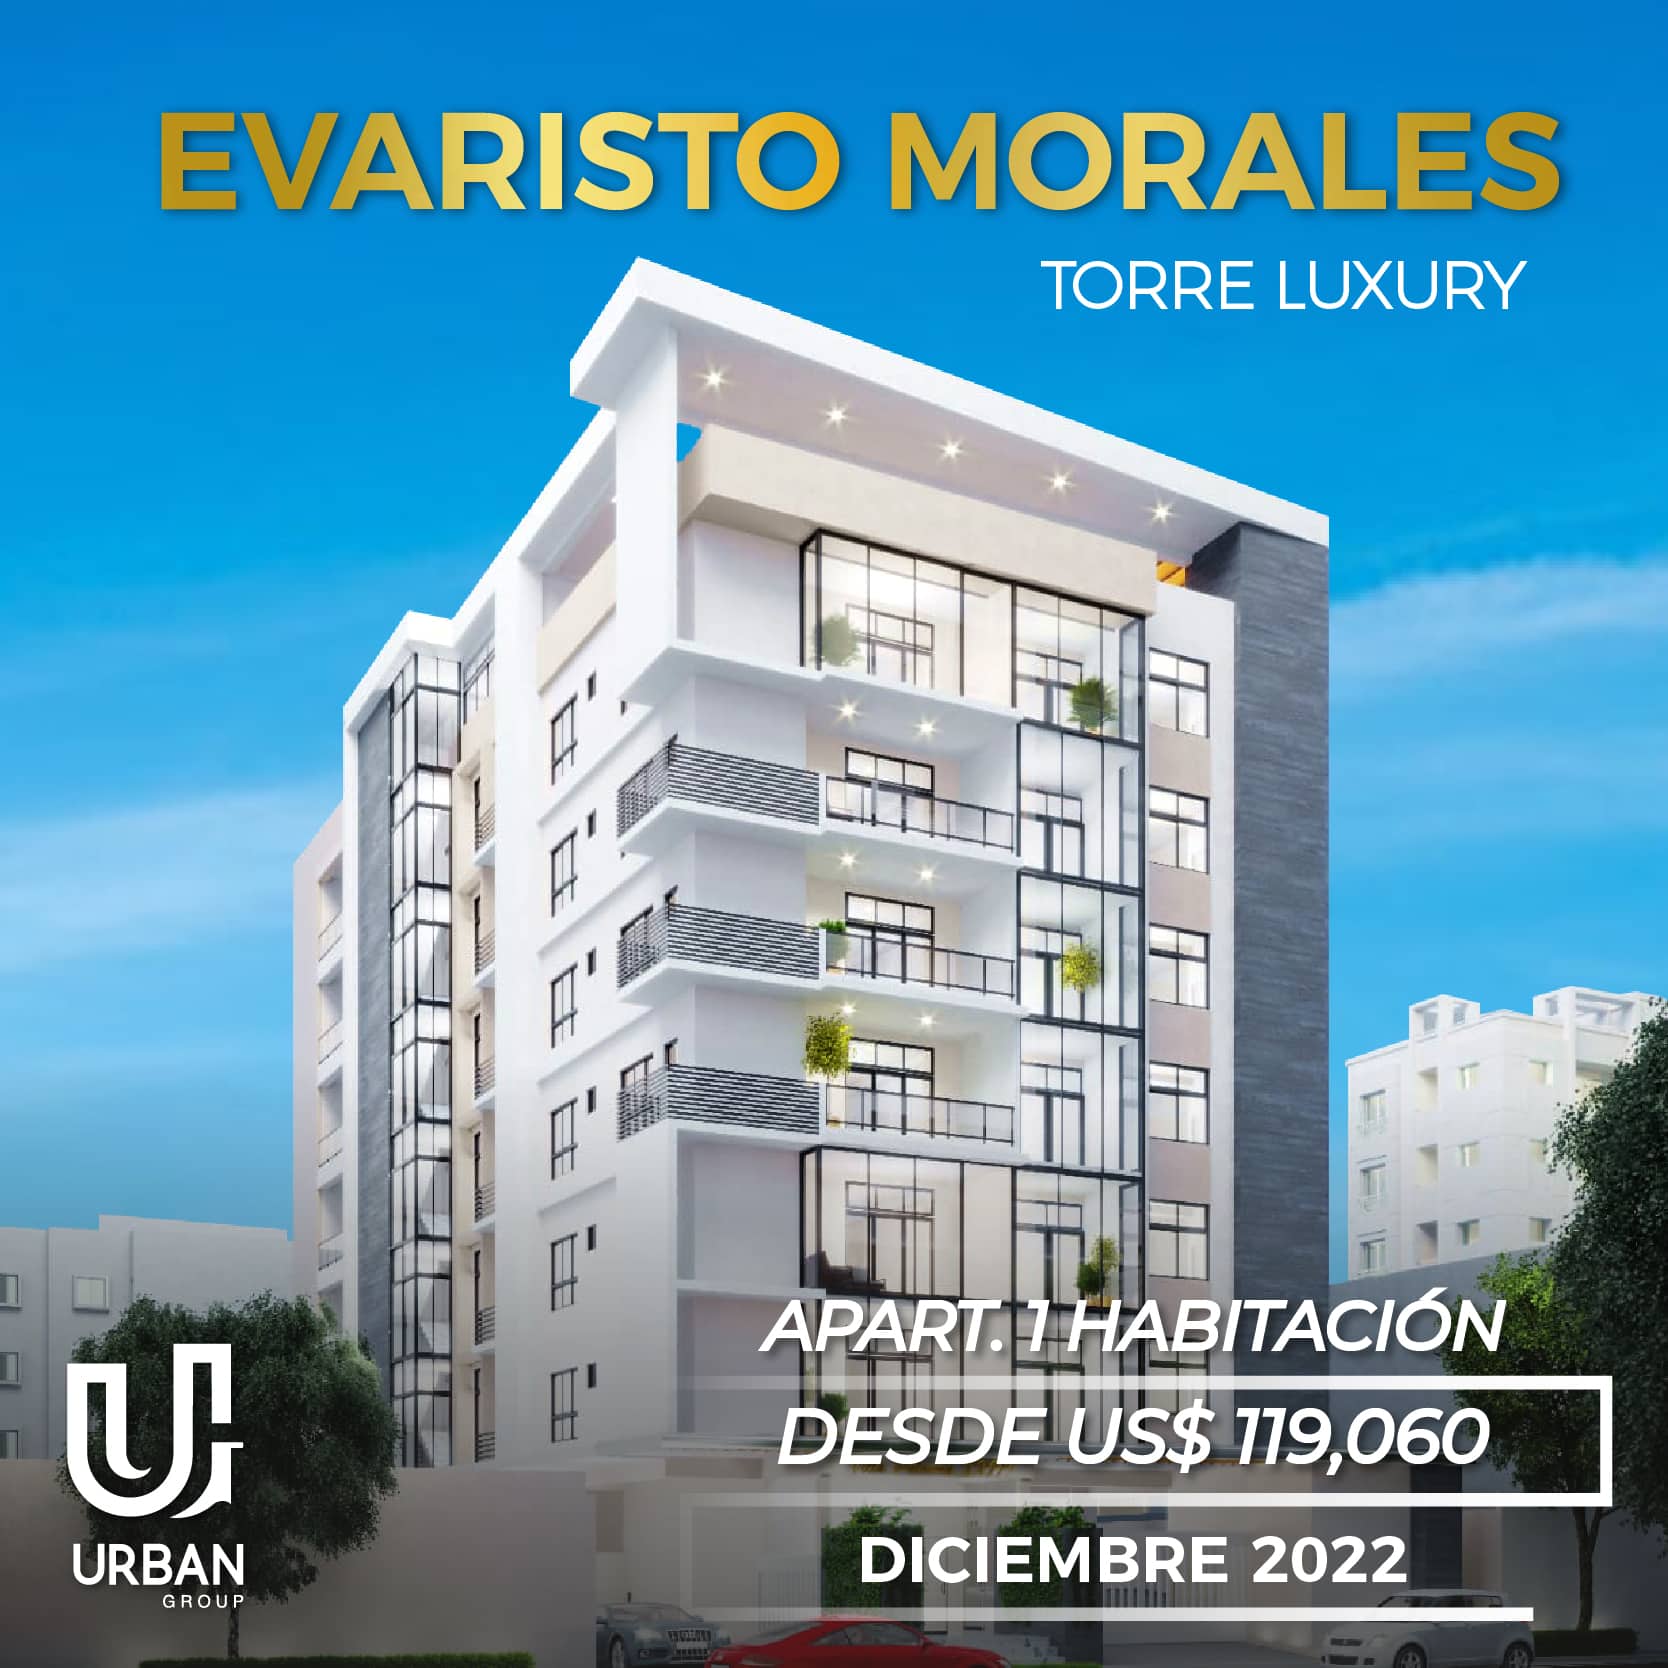 Evaristo Morales Torre Luxury